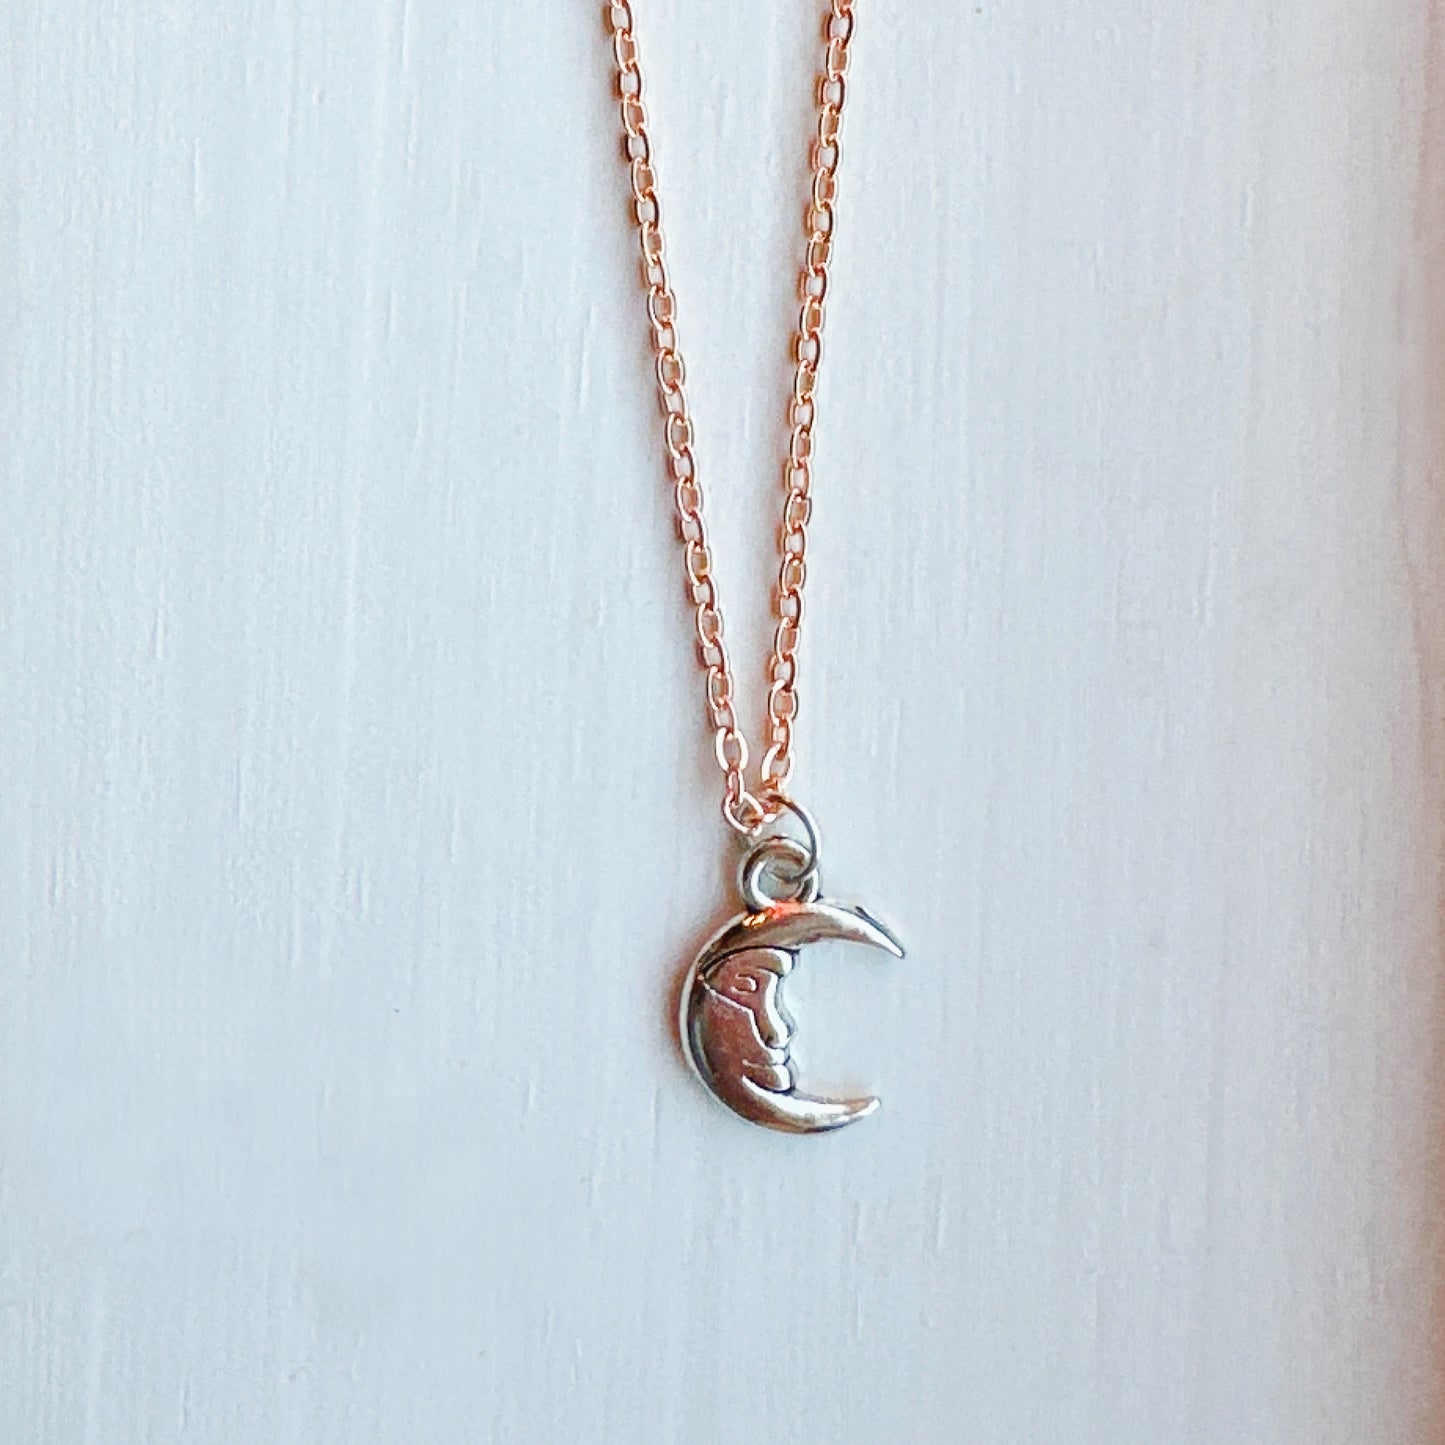 Sleeping Crescent Moon Pendant Necklace